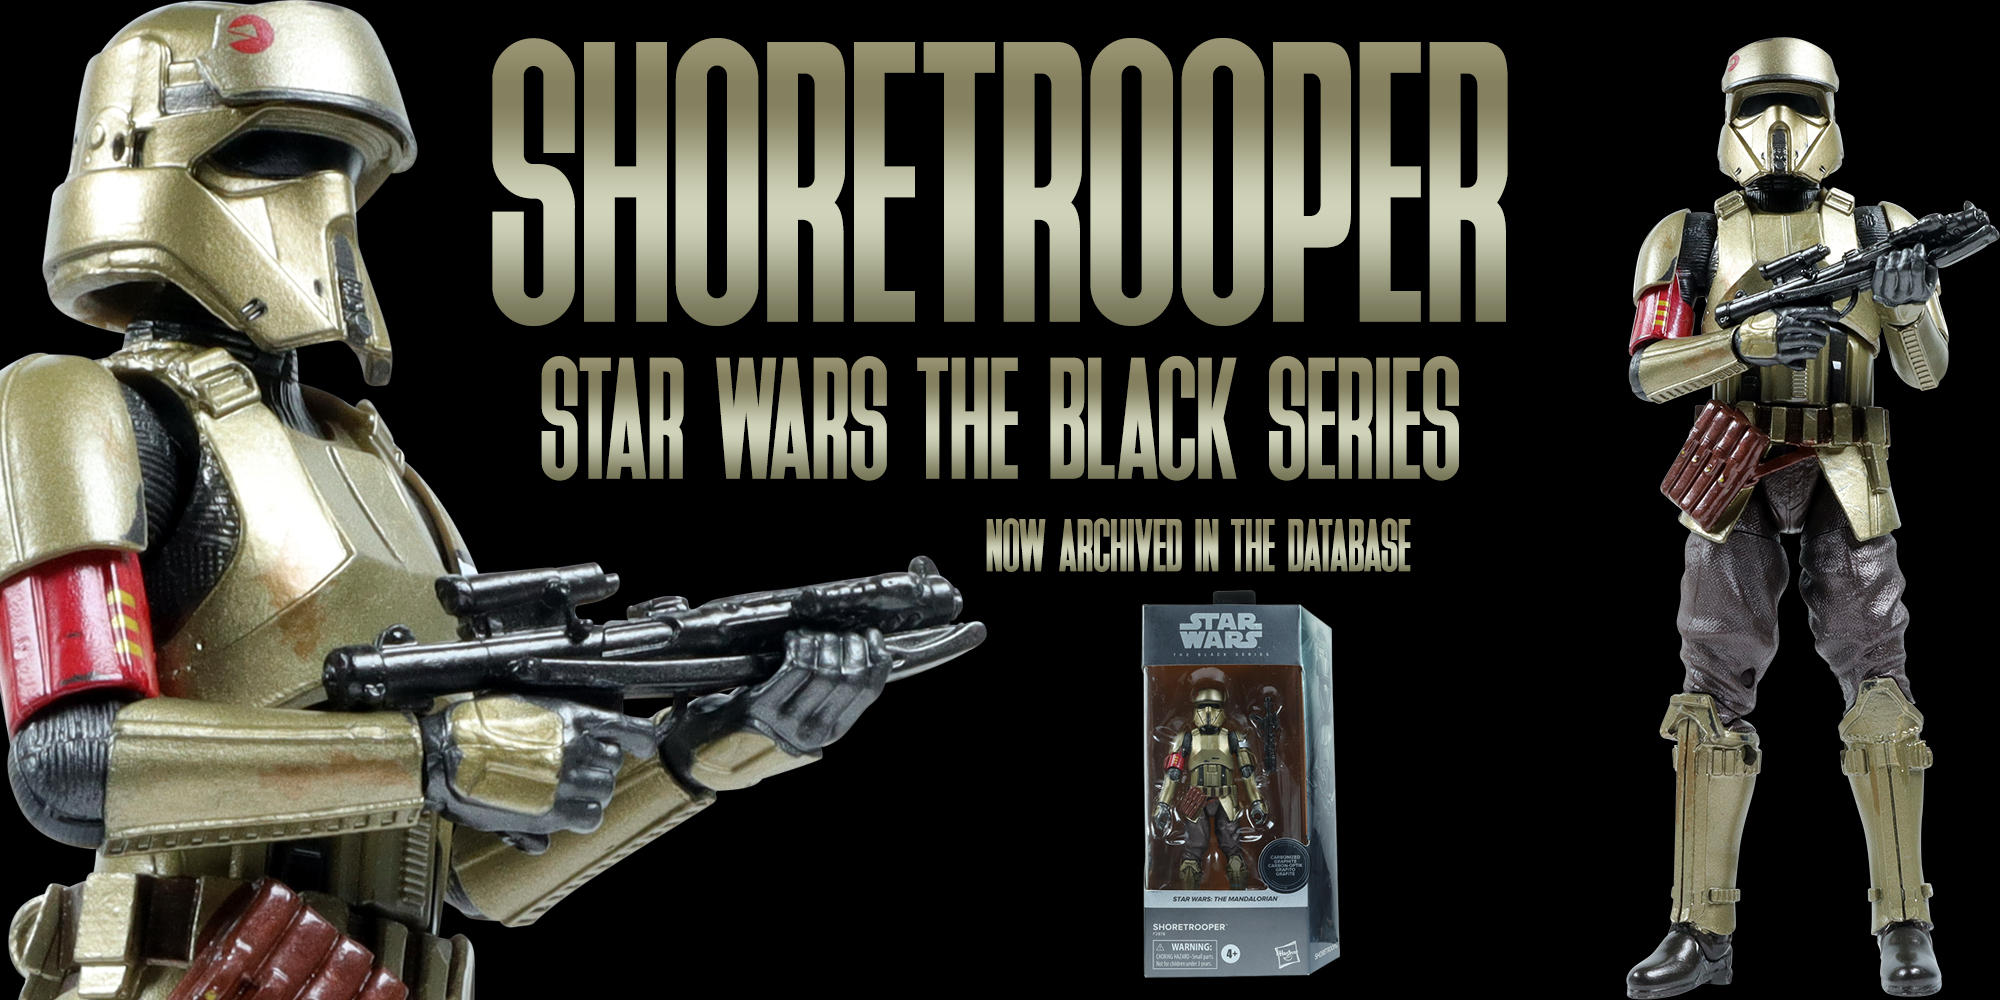 Black Series Shoretrooper Carbonized Added